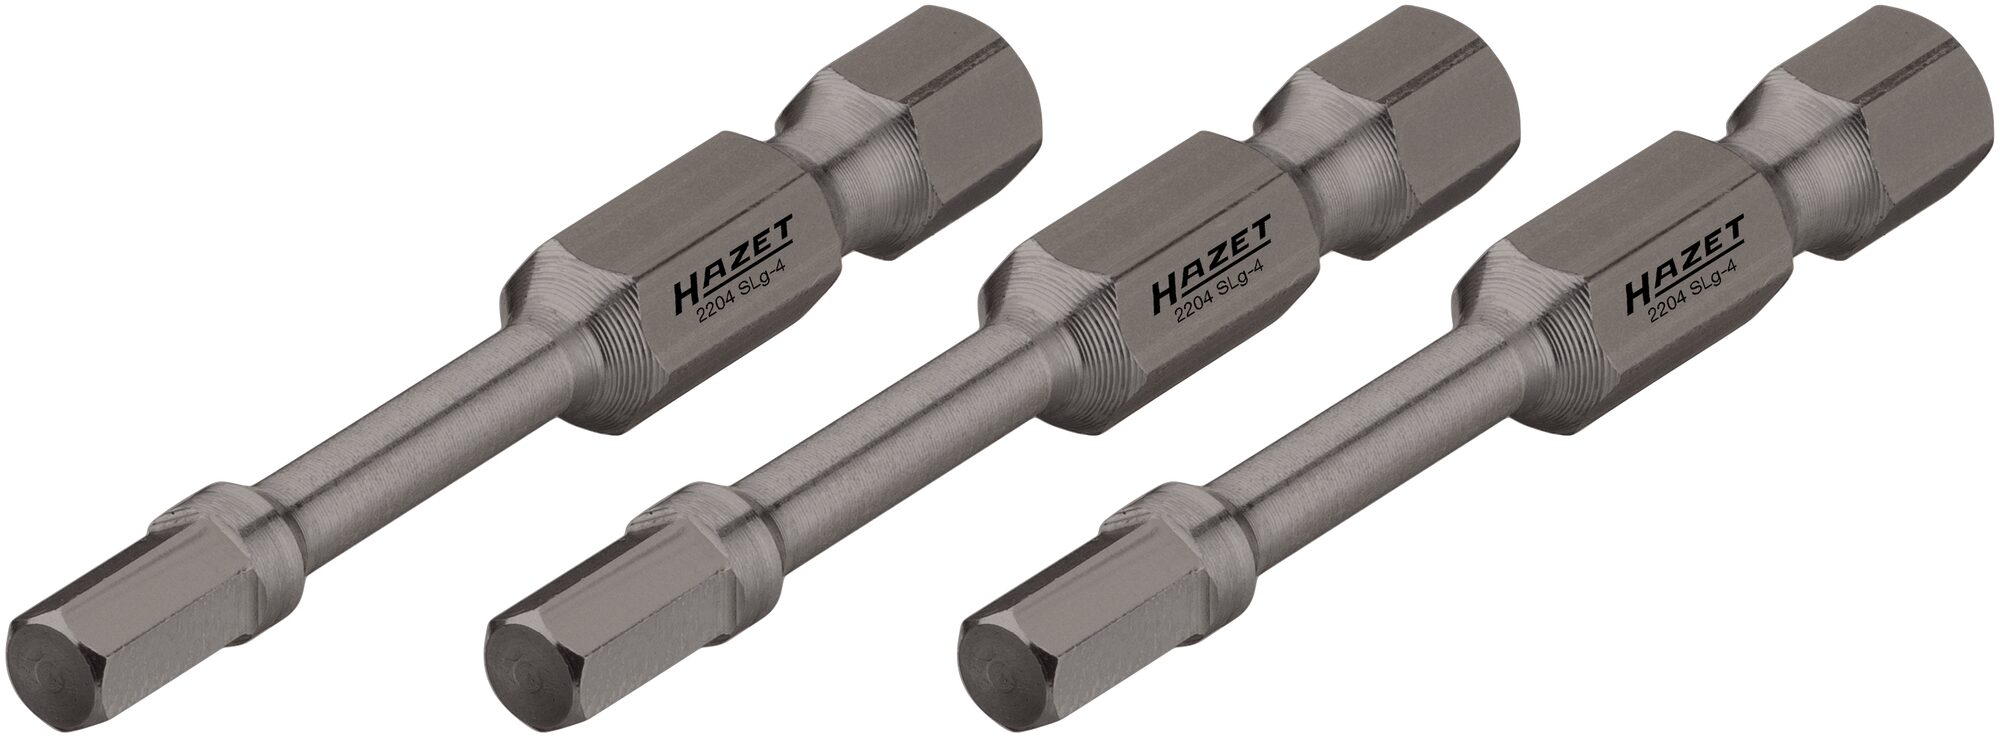 HAZET Schlag-, Maschinenschrauber Torsions-Bits 2204SLG-8/3 · Sechskant massiv 6,3 (1/4 Zoll) · Innen Sechskant Profil · 8 mm · Anzahl Werkzeuge: 3